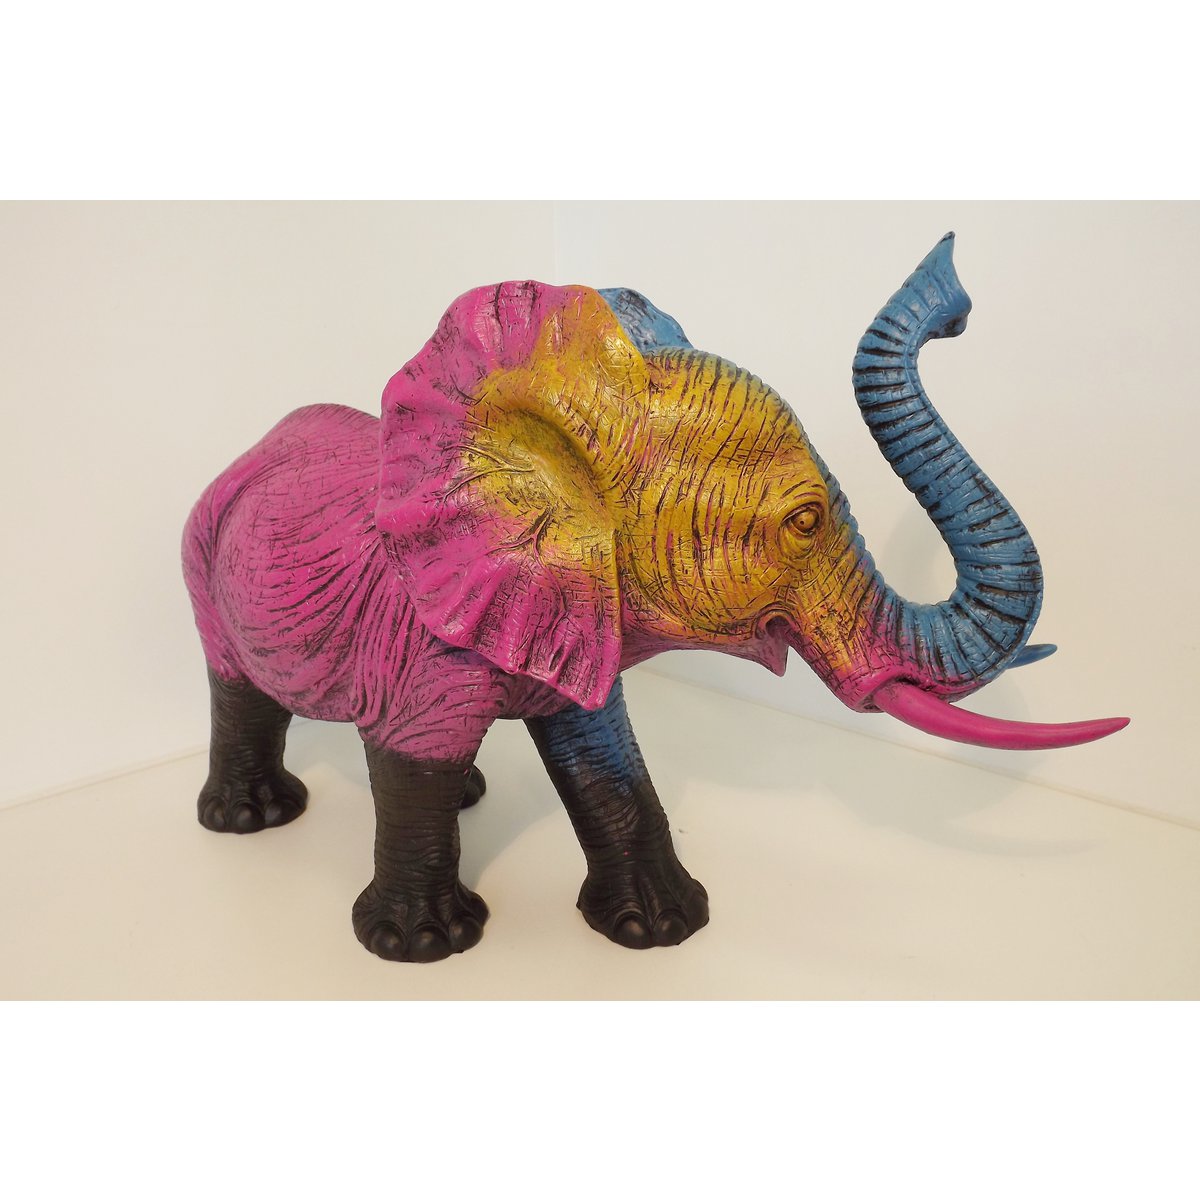 Edle Elefant Figur 52cm Bunt bemalt Kunst Elephant Modell Statue